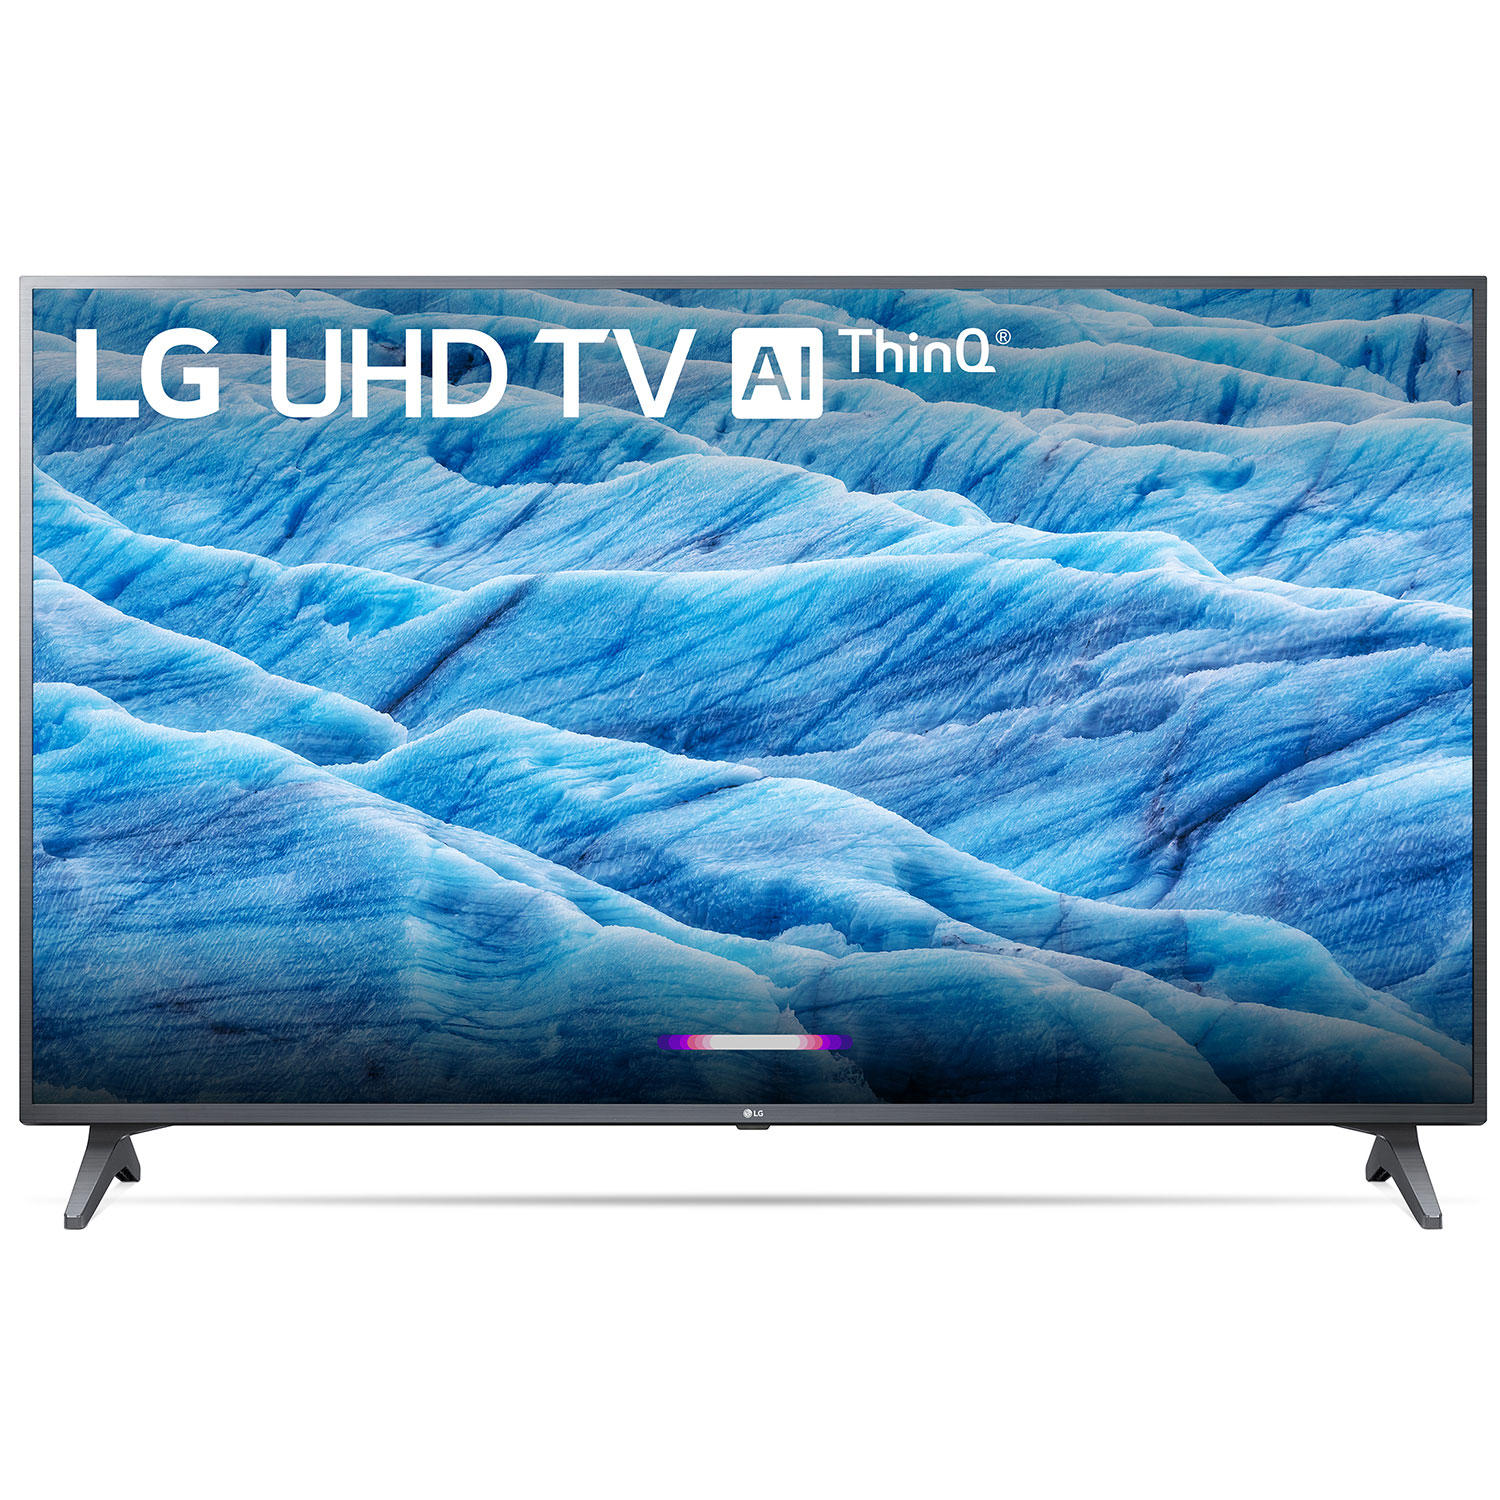 LG 65UM7300AUE 65″ 4K Ultra HD Smart HDR TV with AI ThinQ